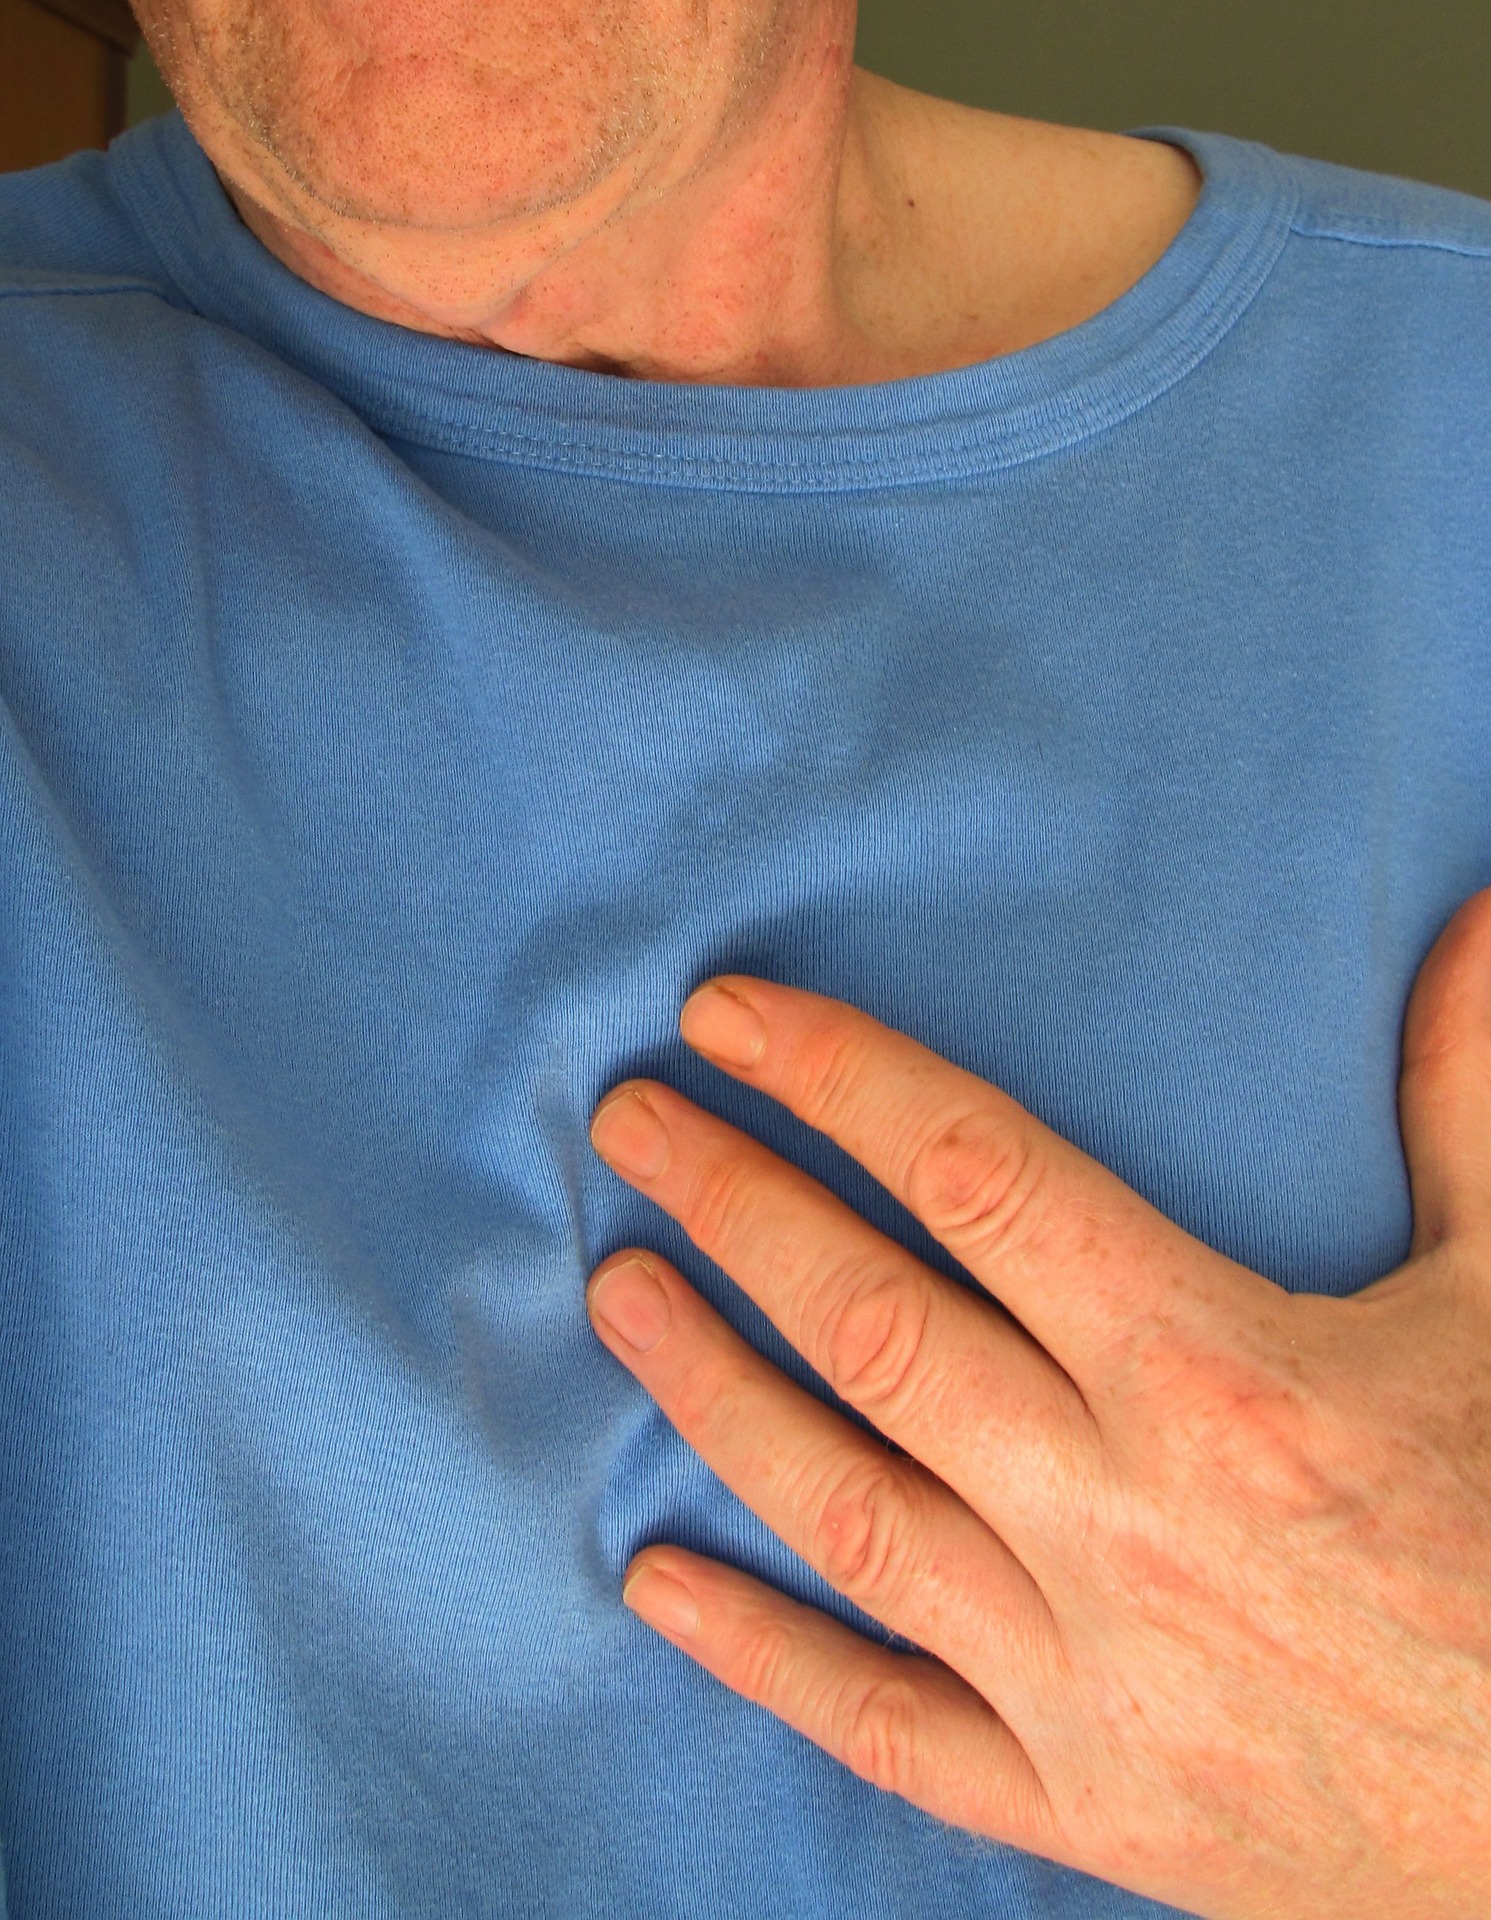 Panik Symptome Herzinfarkt